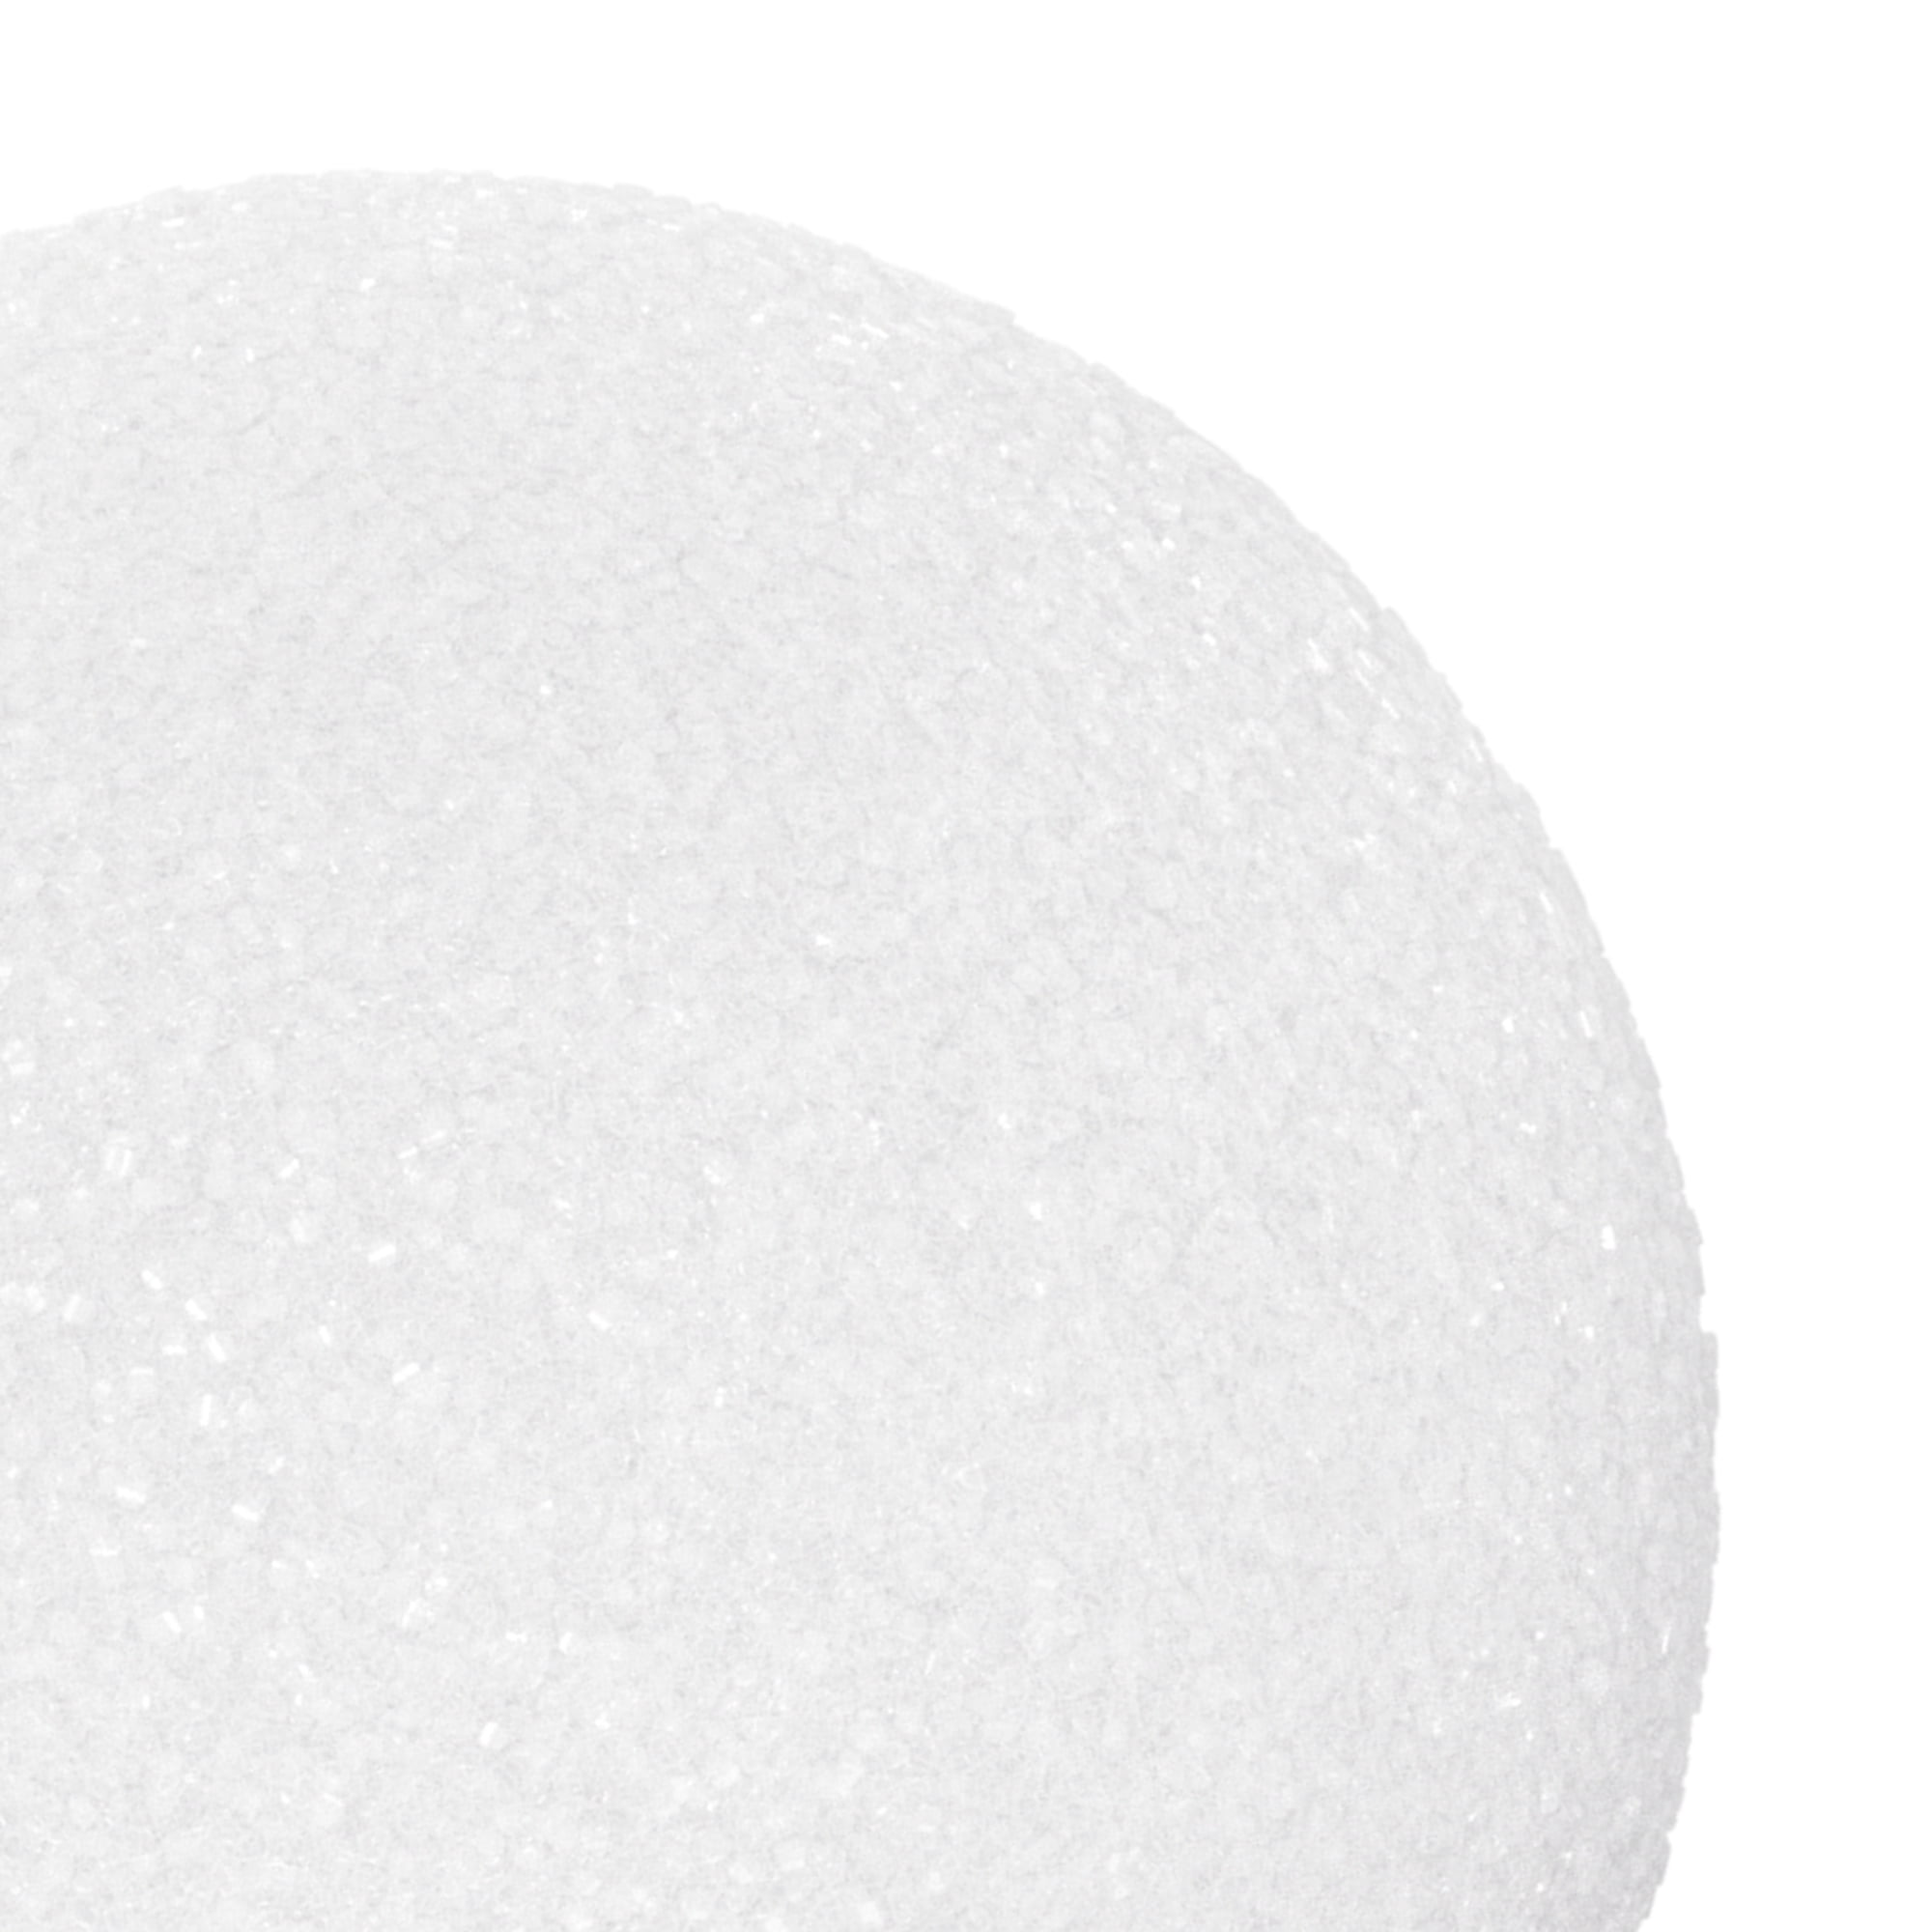  DOITOOL 1000 pcs Foam Ball Foam for Crafts styrophome Balls  Craft Foam Felt Balls for Crafts Cake Decor Hand Decor miniture Decoration  White self Made Foam Brick eps polystyrene